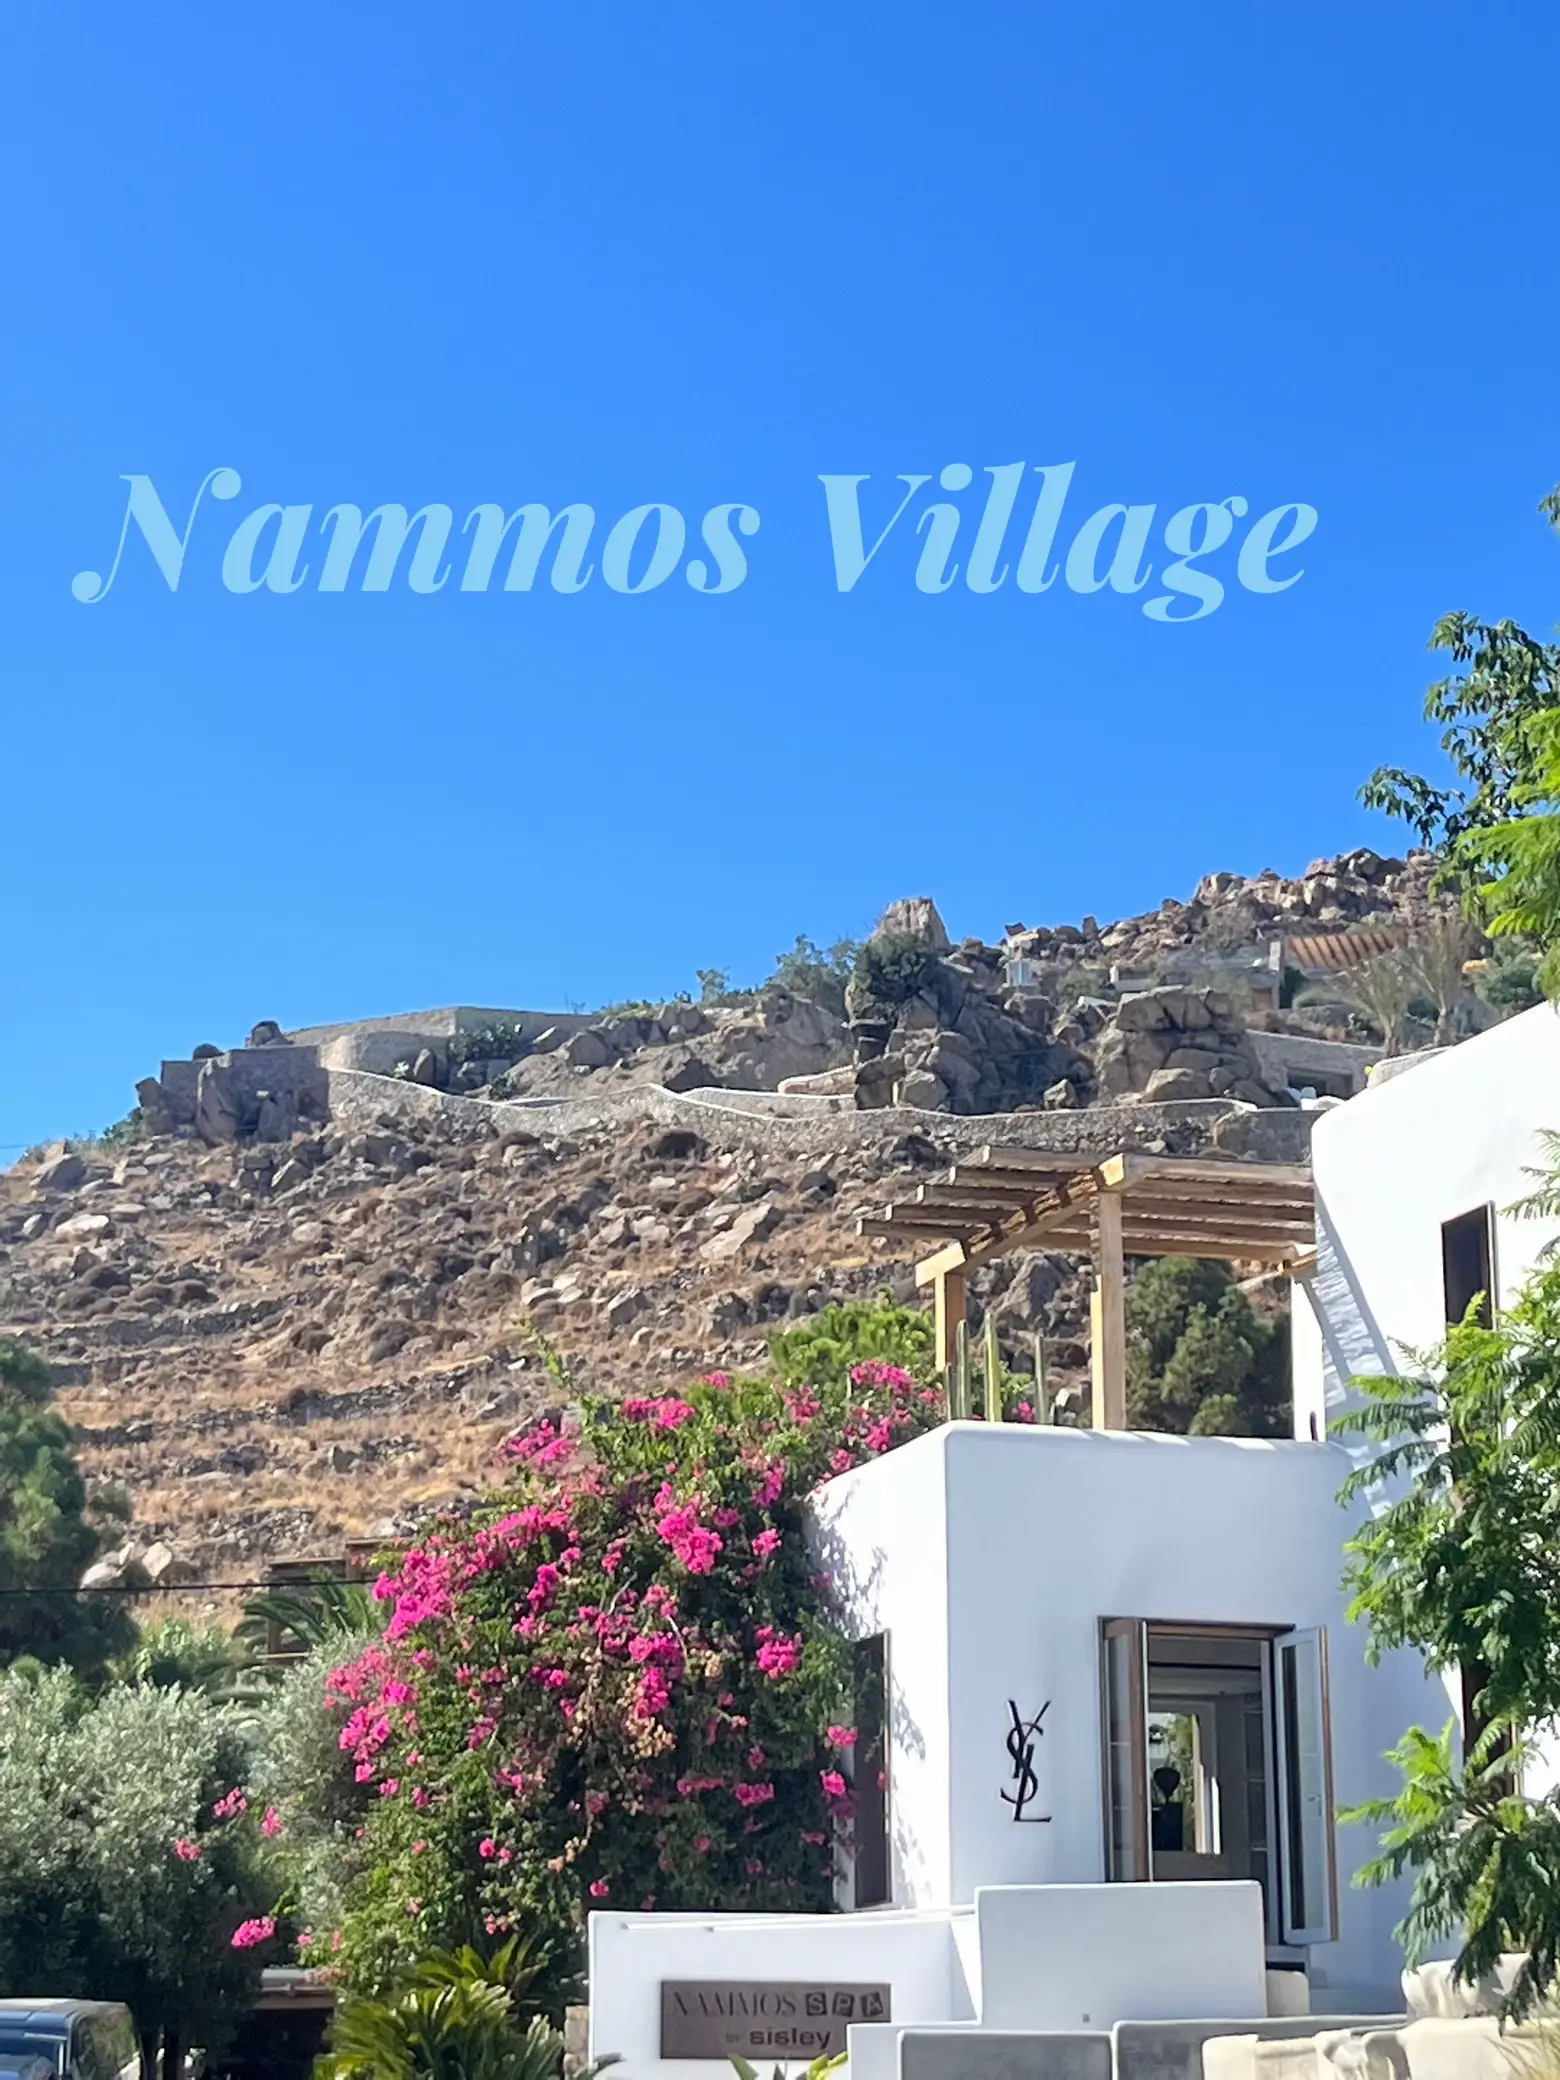 NAMMOS Village